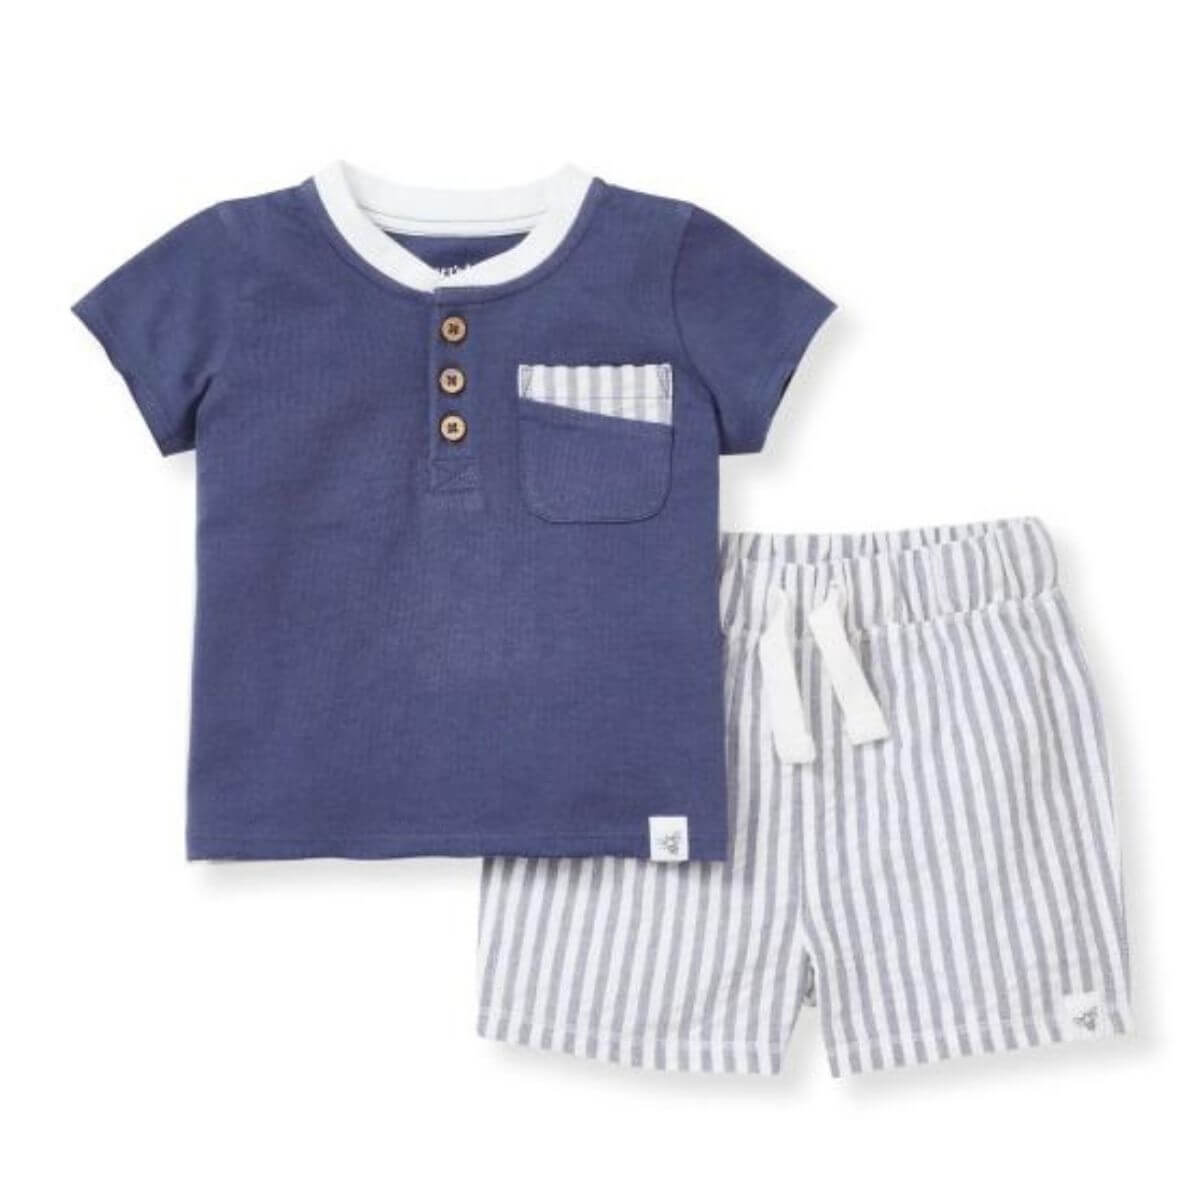 Organic Baby Boy Outfit / Henley Tee & Short Set - Seersucker